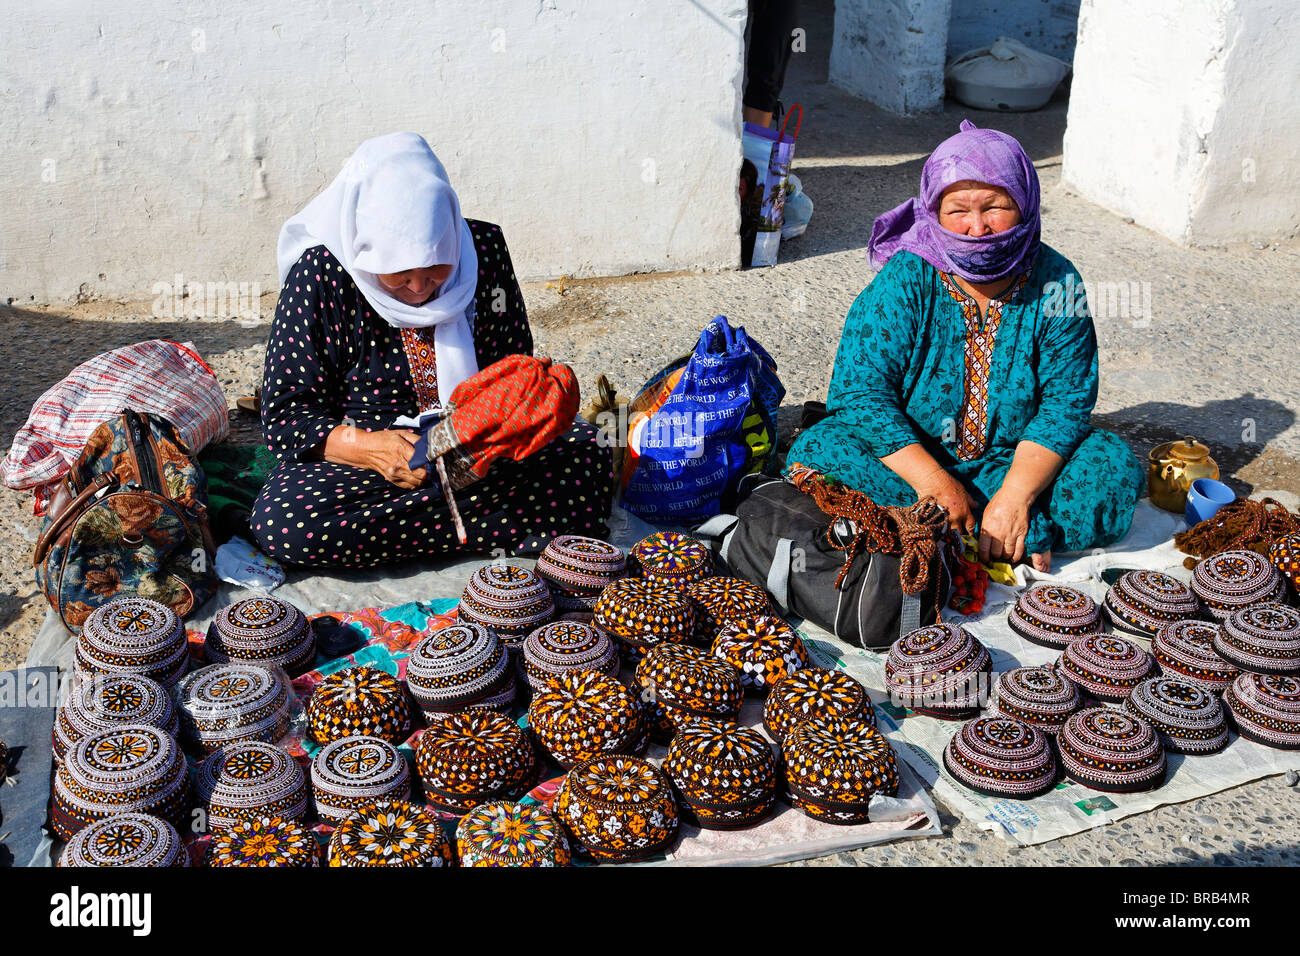 Turkmenistan - Ashgabat - market stall selling traditional hats Stock Photo